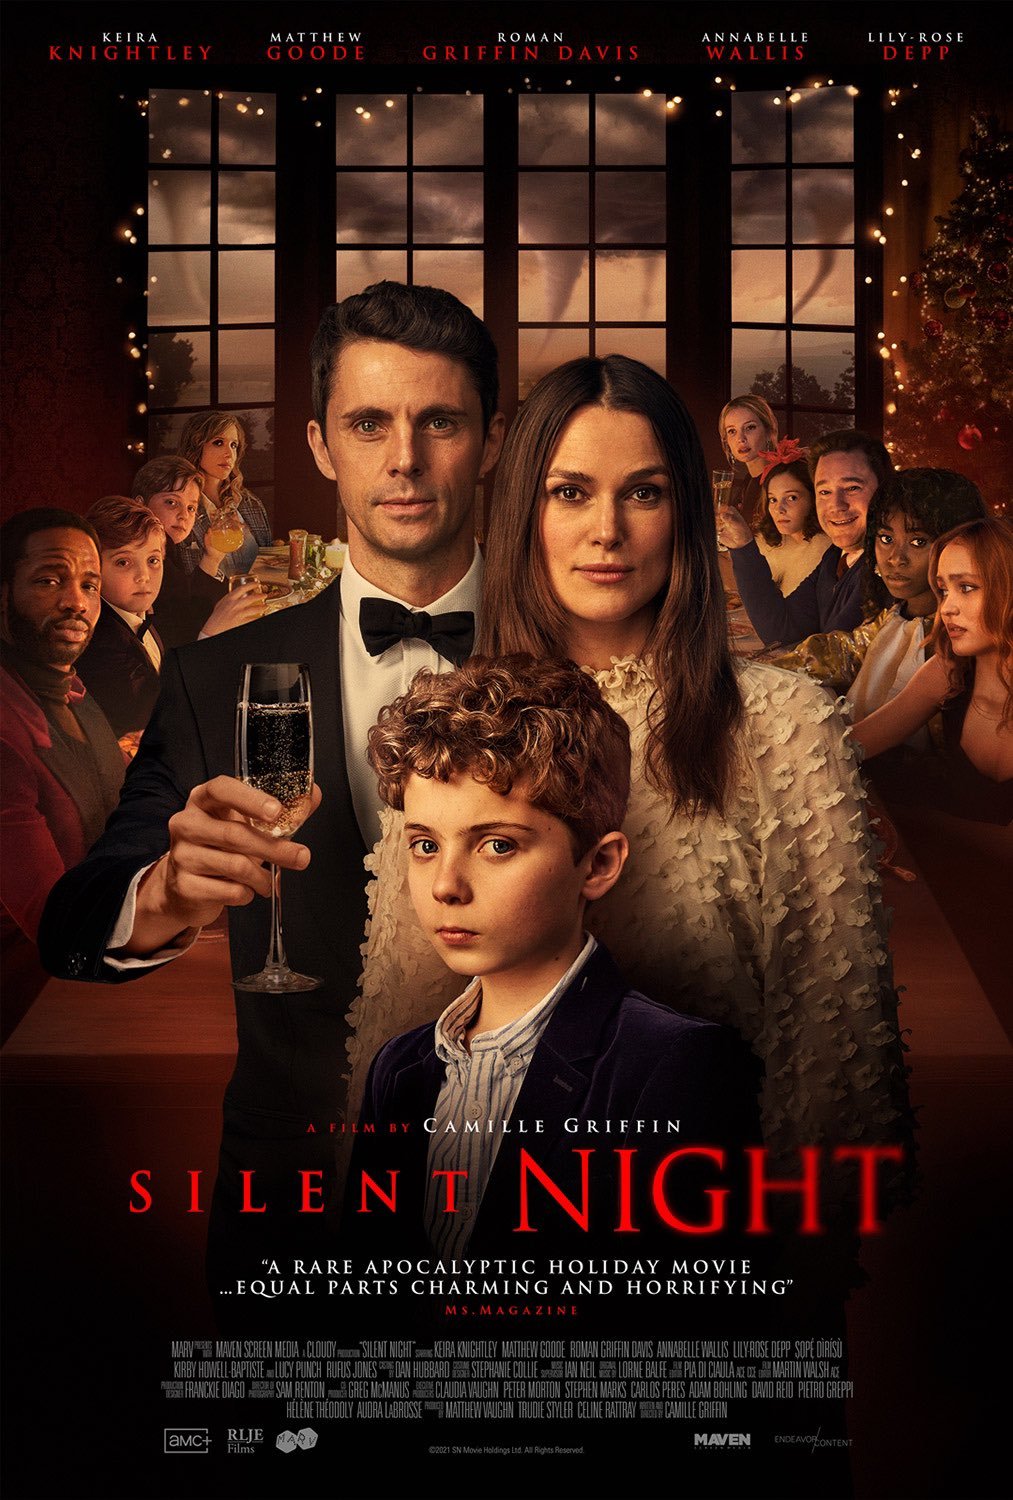 ⬆️ Silent Night official poster! Starring Matthew Goode, Keira Knightley and Roman Griffin-Davis.
In UK cinemas on 3rd December!
? via Keira Knightley source Twitter.